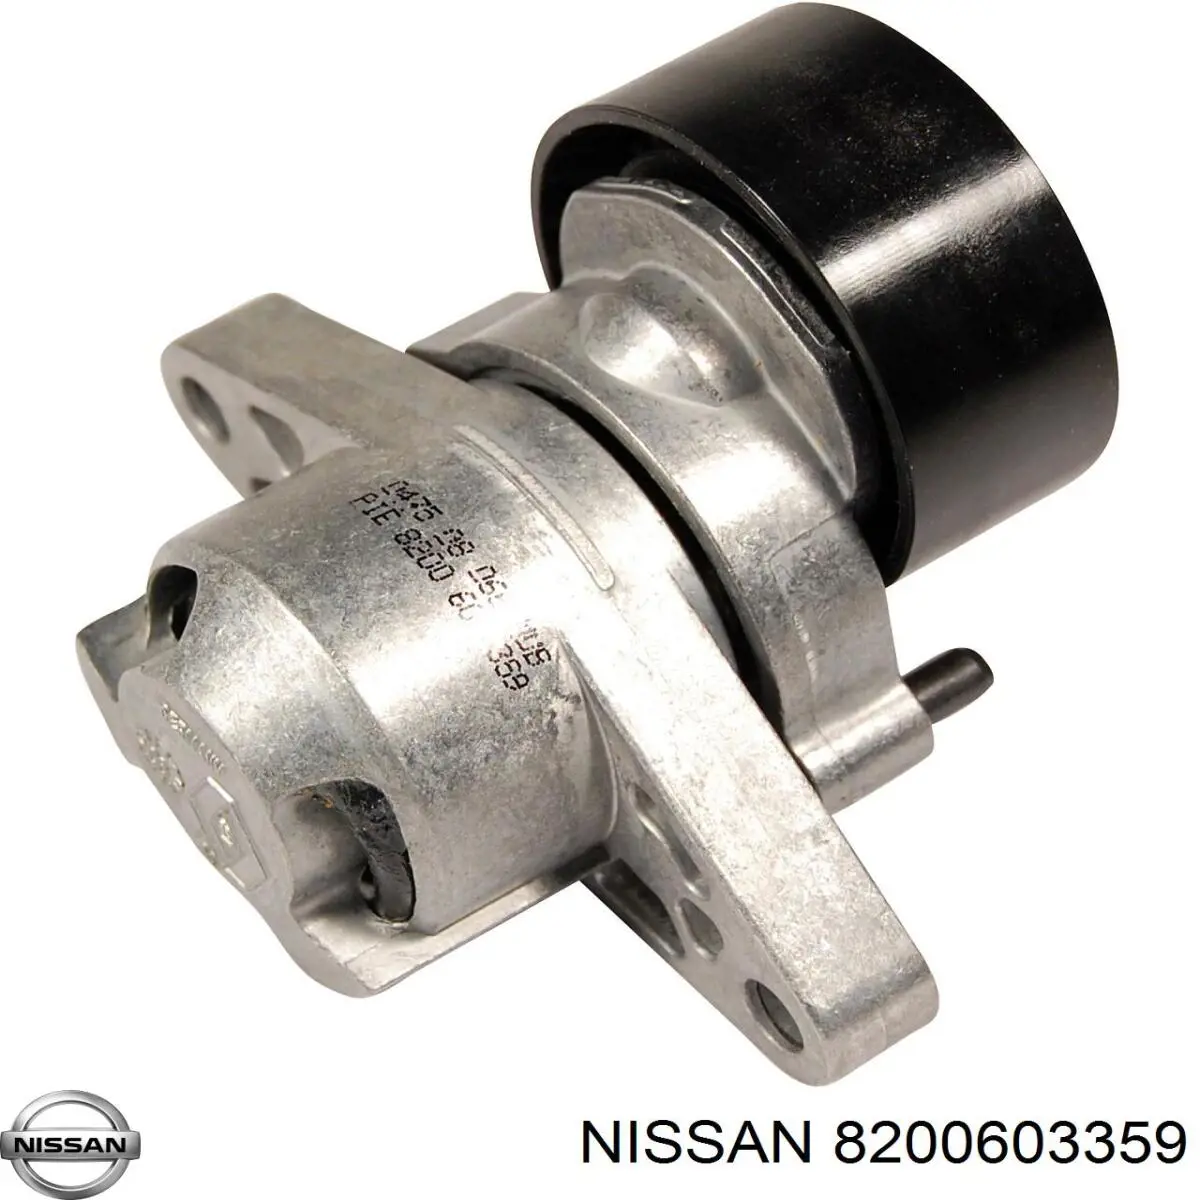 8200603359 Nissan tensor de correa poli v